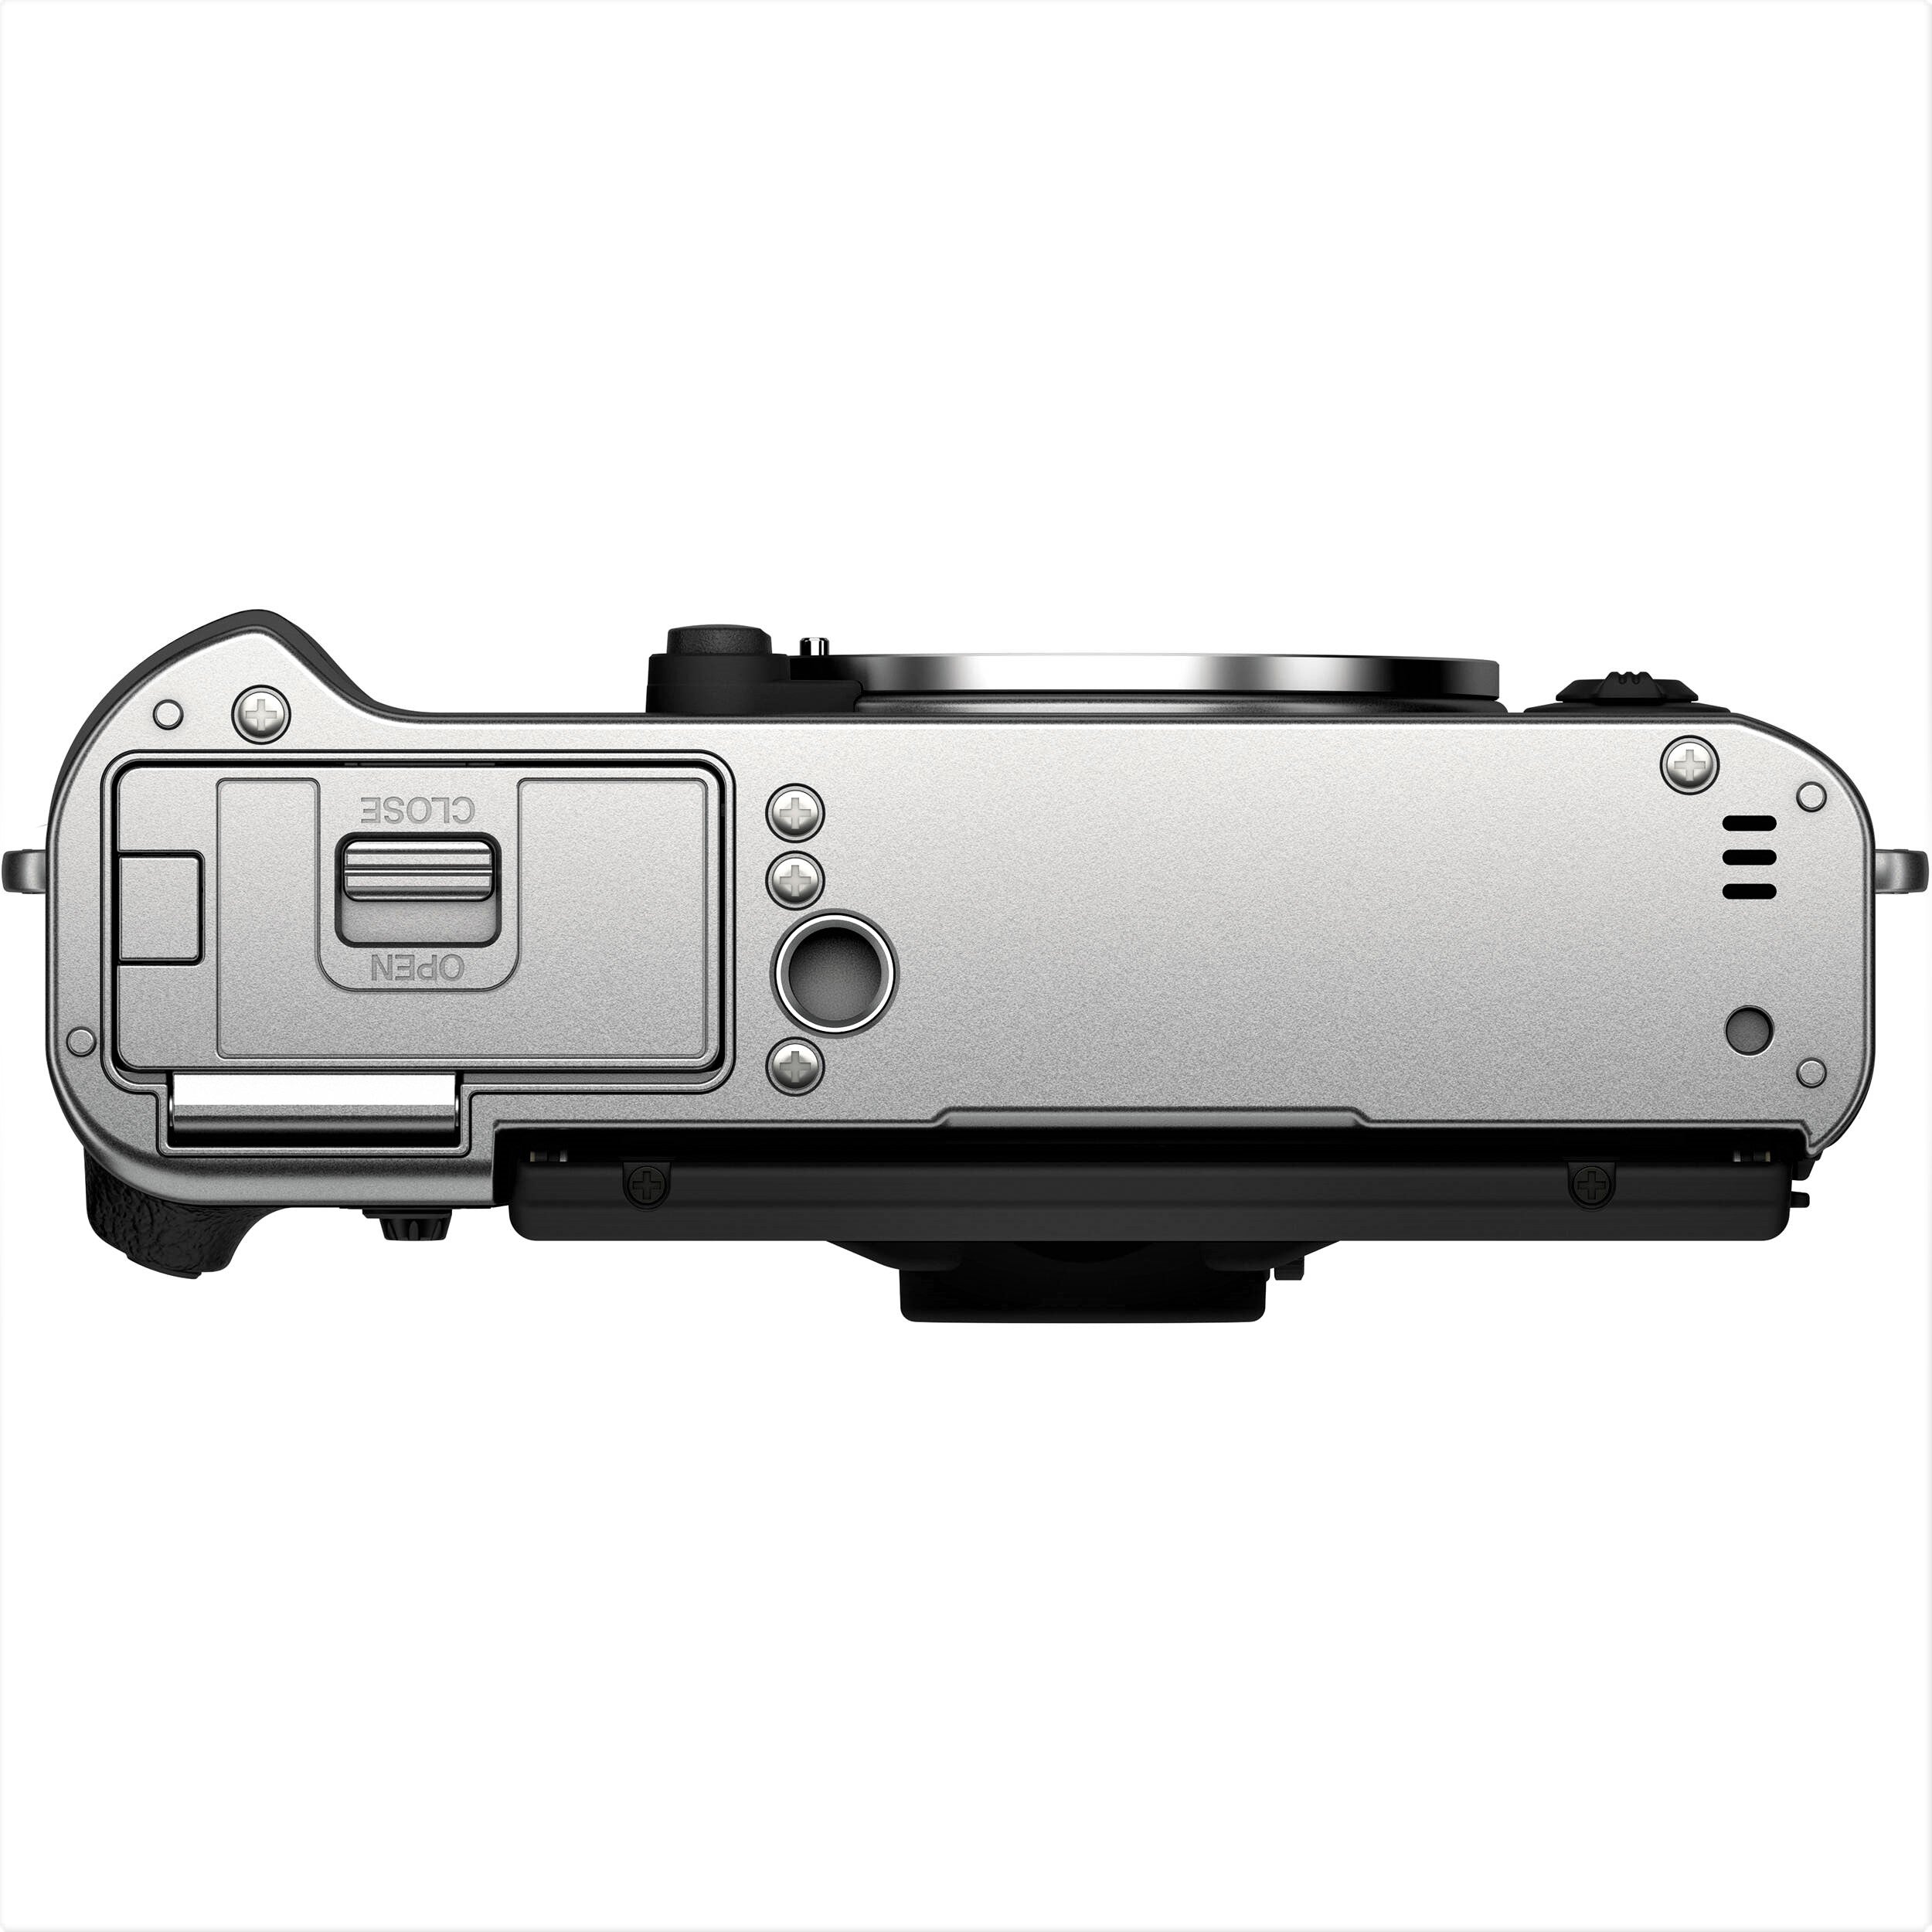 Fujifilm X-T30 II Mirrorless Camera with 18-55mm Lens (Silver) - Bottom View